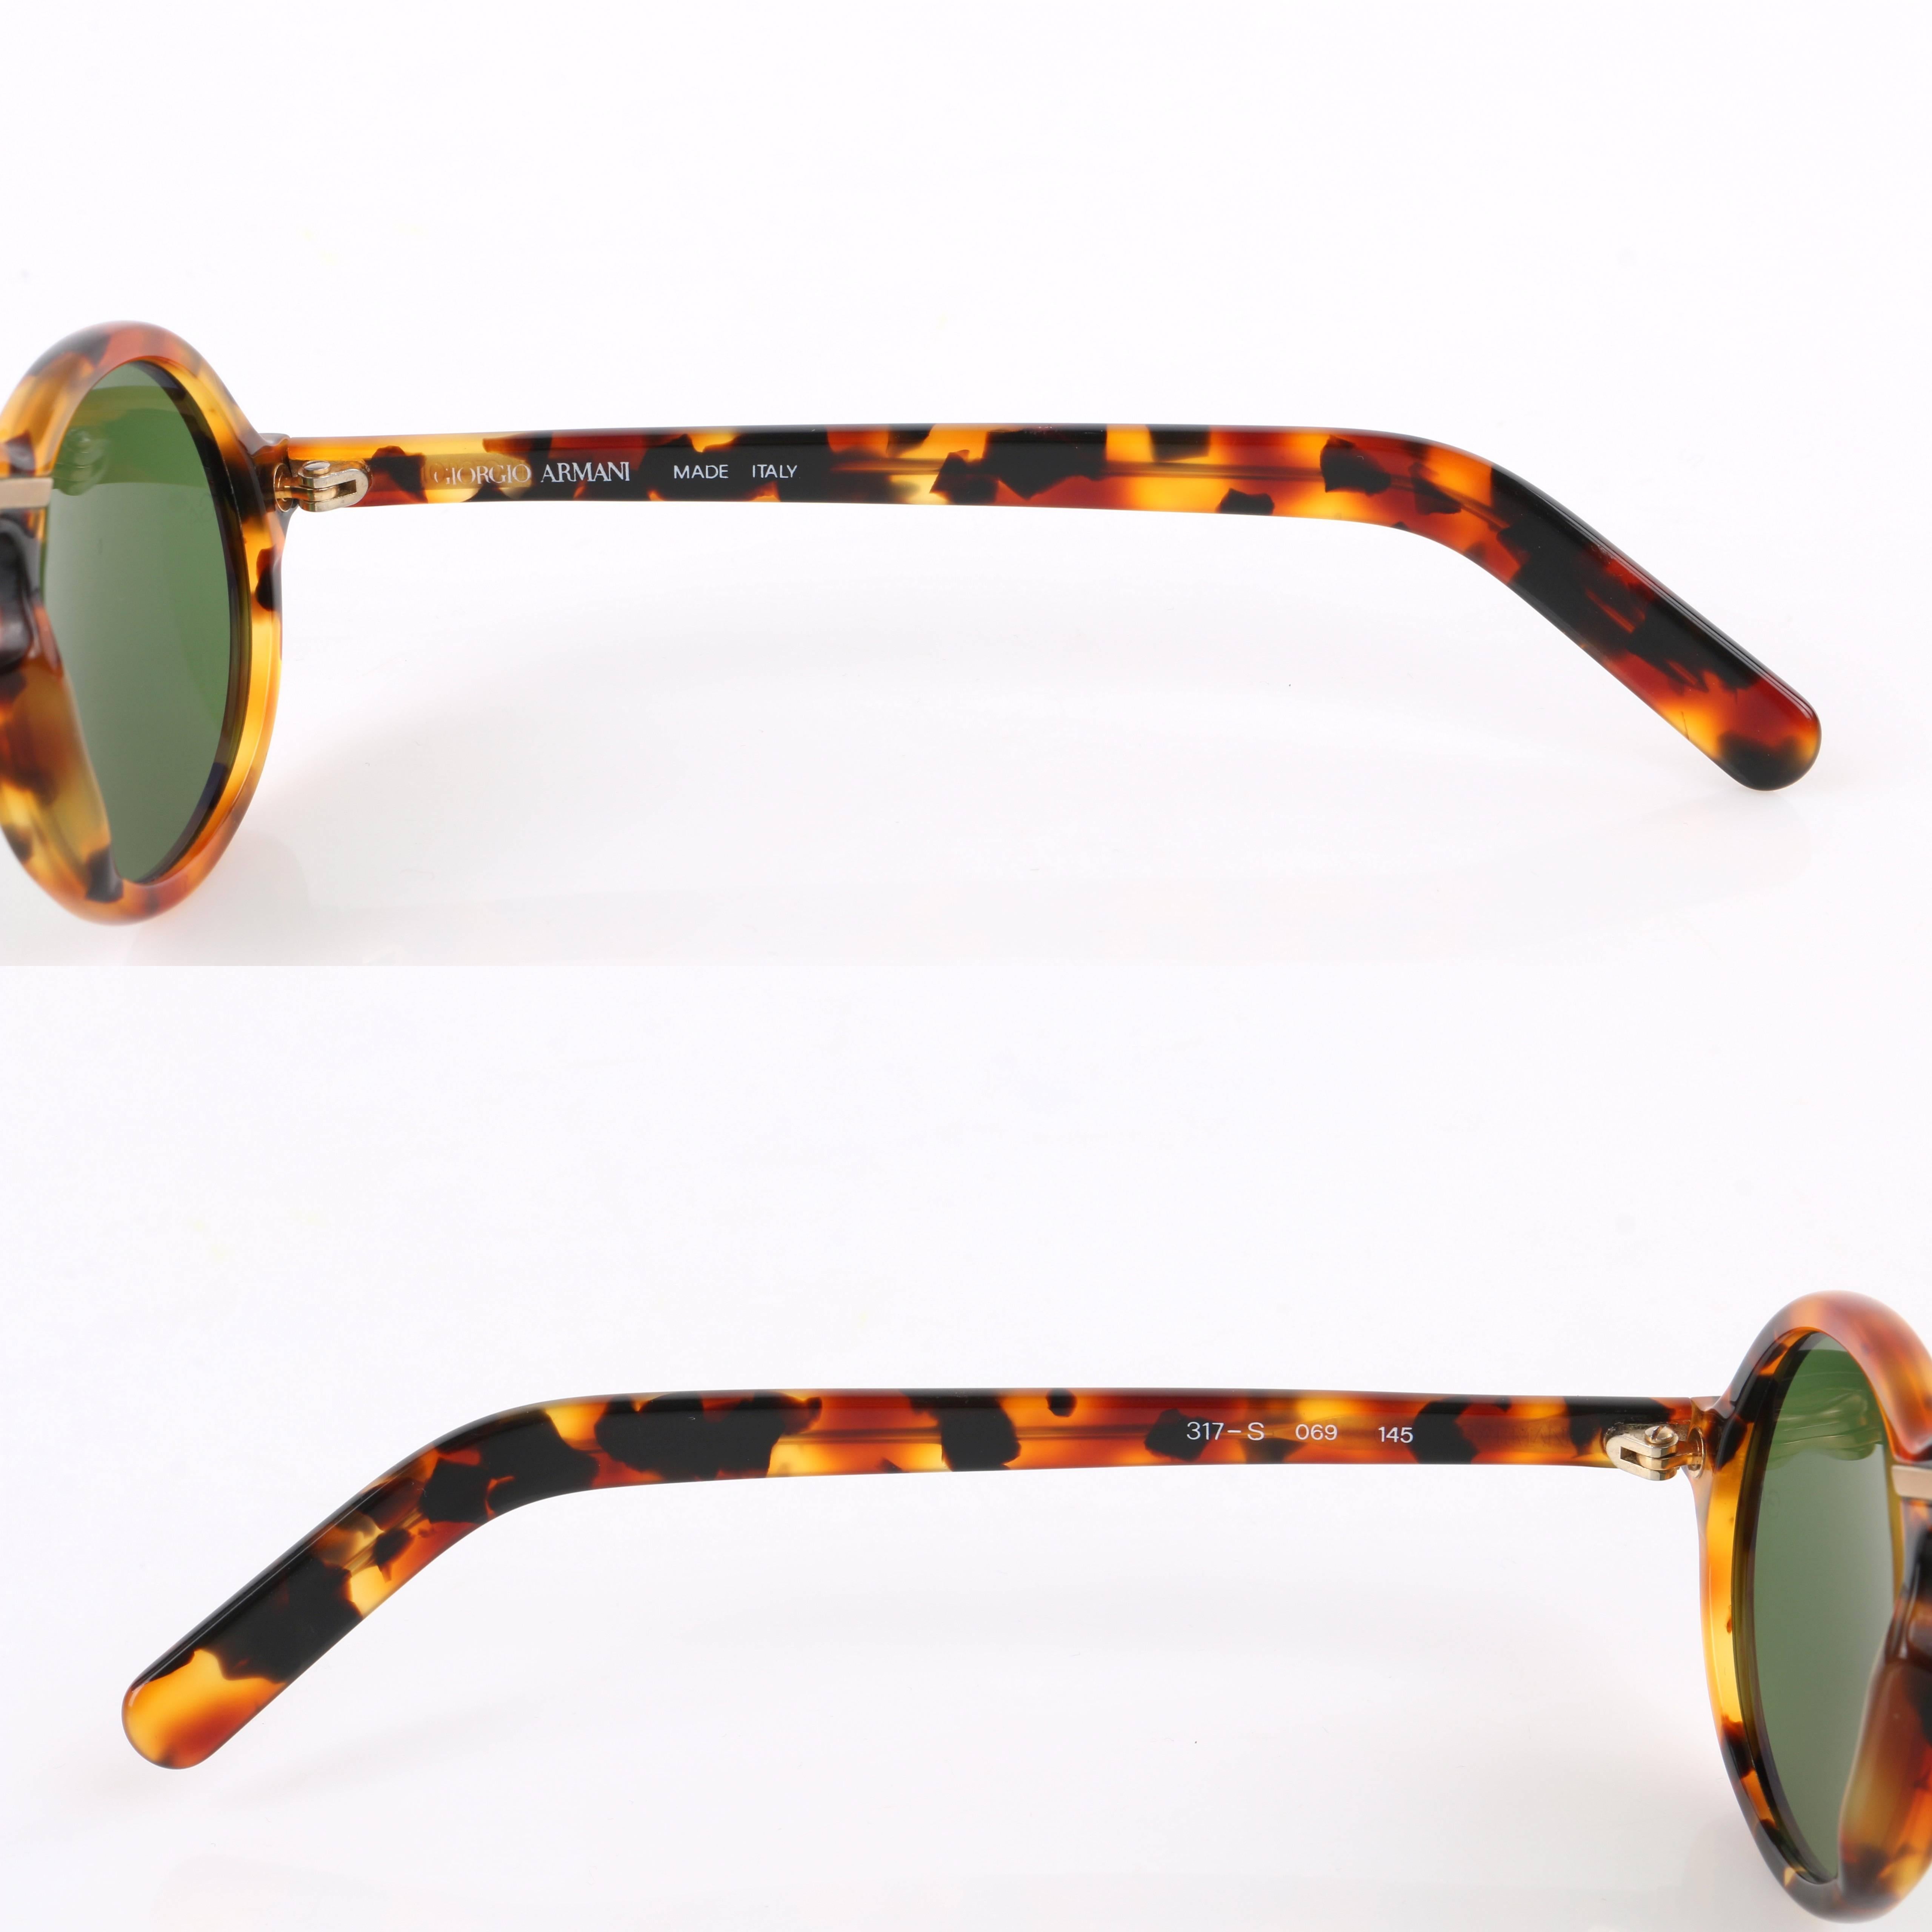 Brown GIORGIO ARMANI c.1990's Round Tortoiseshell Frame Sunglasses 617-S 069 RARE